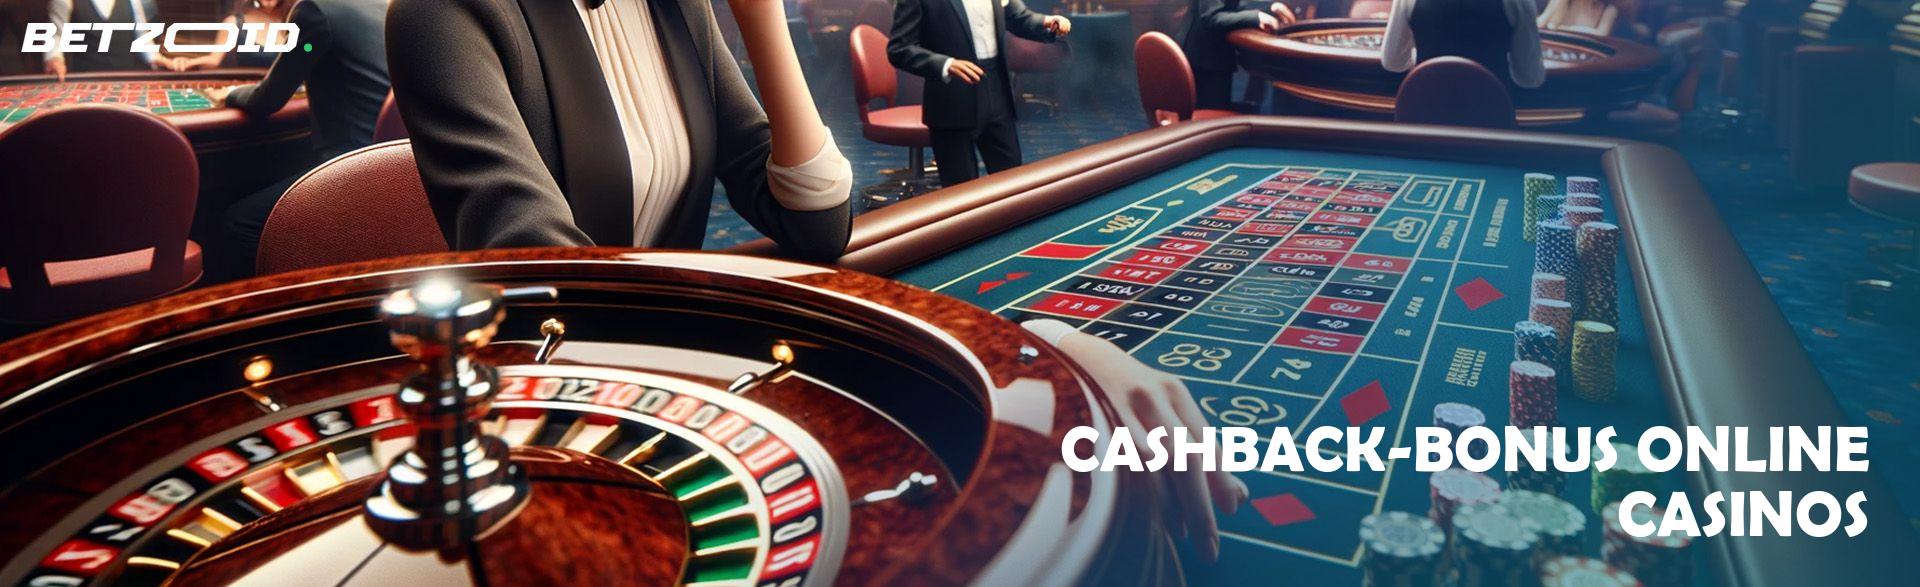 Cashback-Bonus Online Casinos.